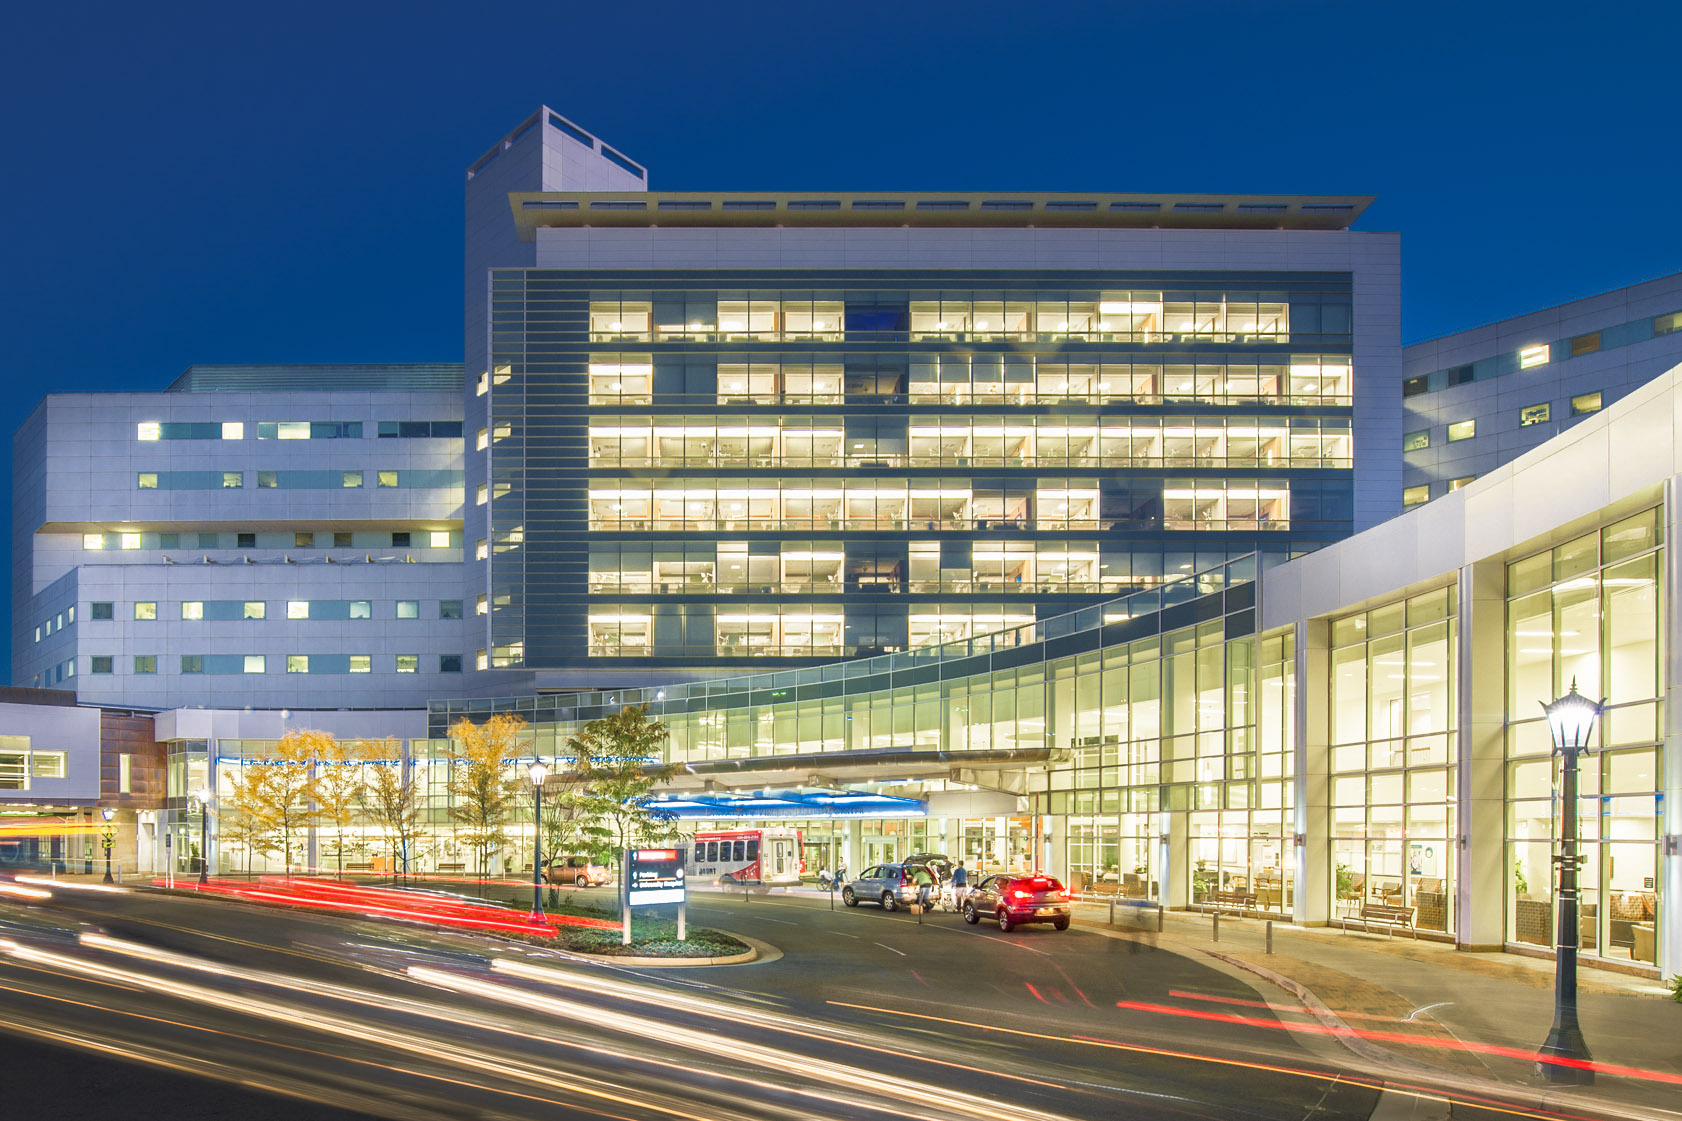 UVA medical Center with lights on at night